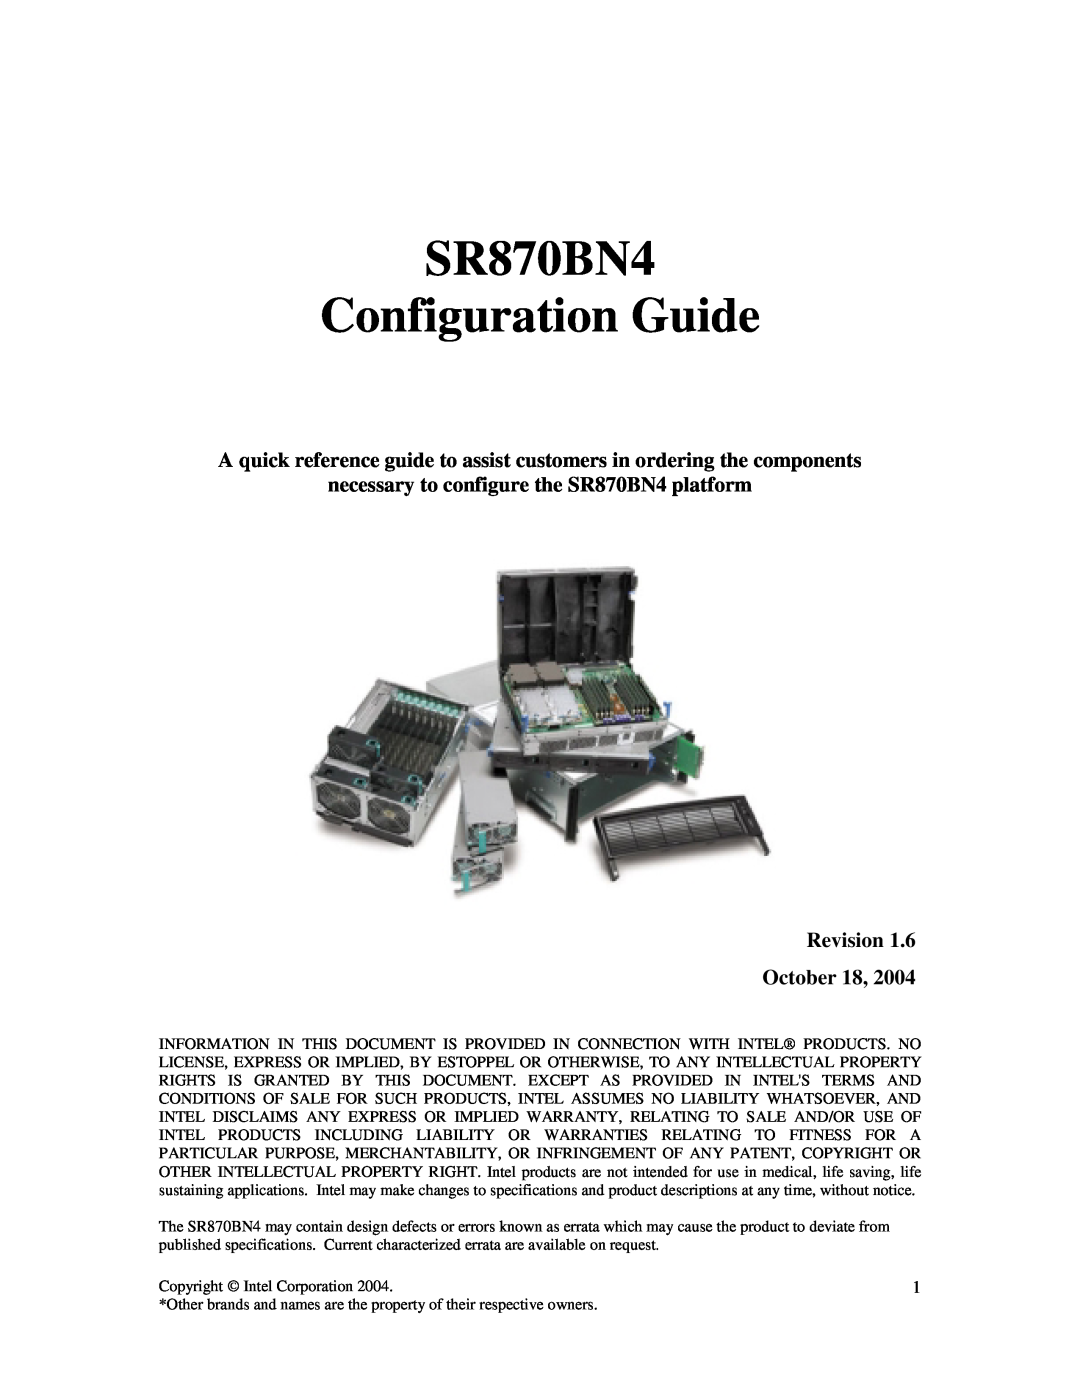 Intel warranty SR870BN4 Configuration Guide, necessary to configure the SR870BN4 platform, Revision October 